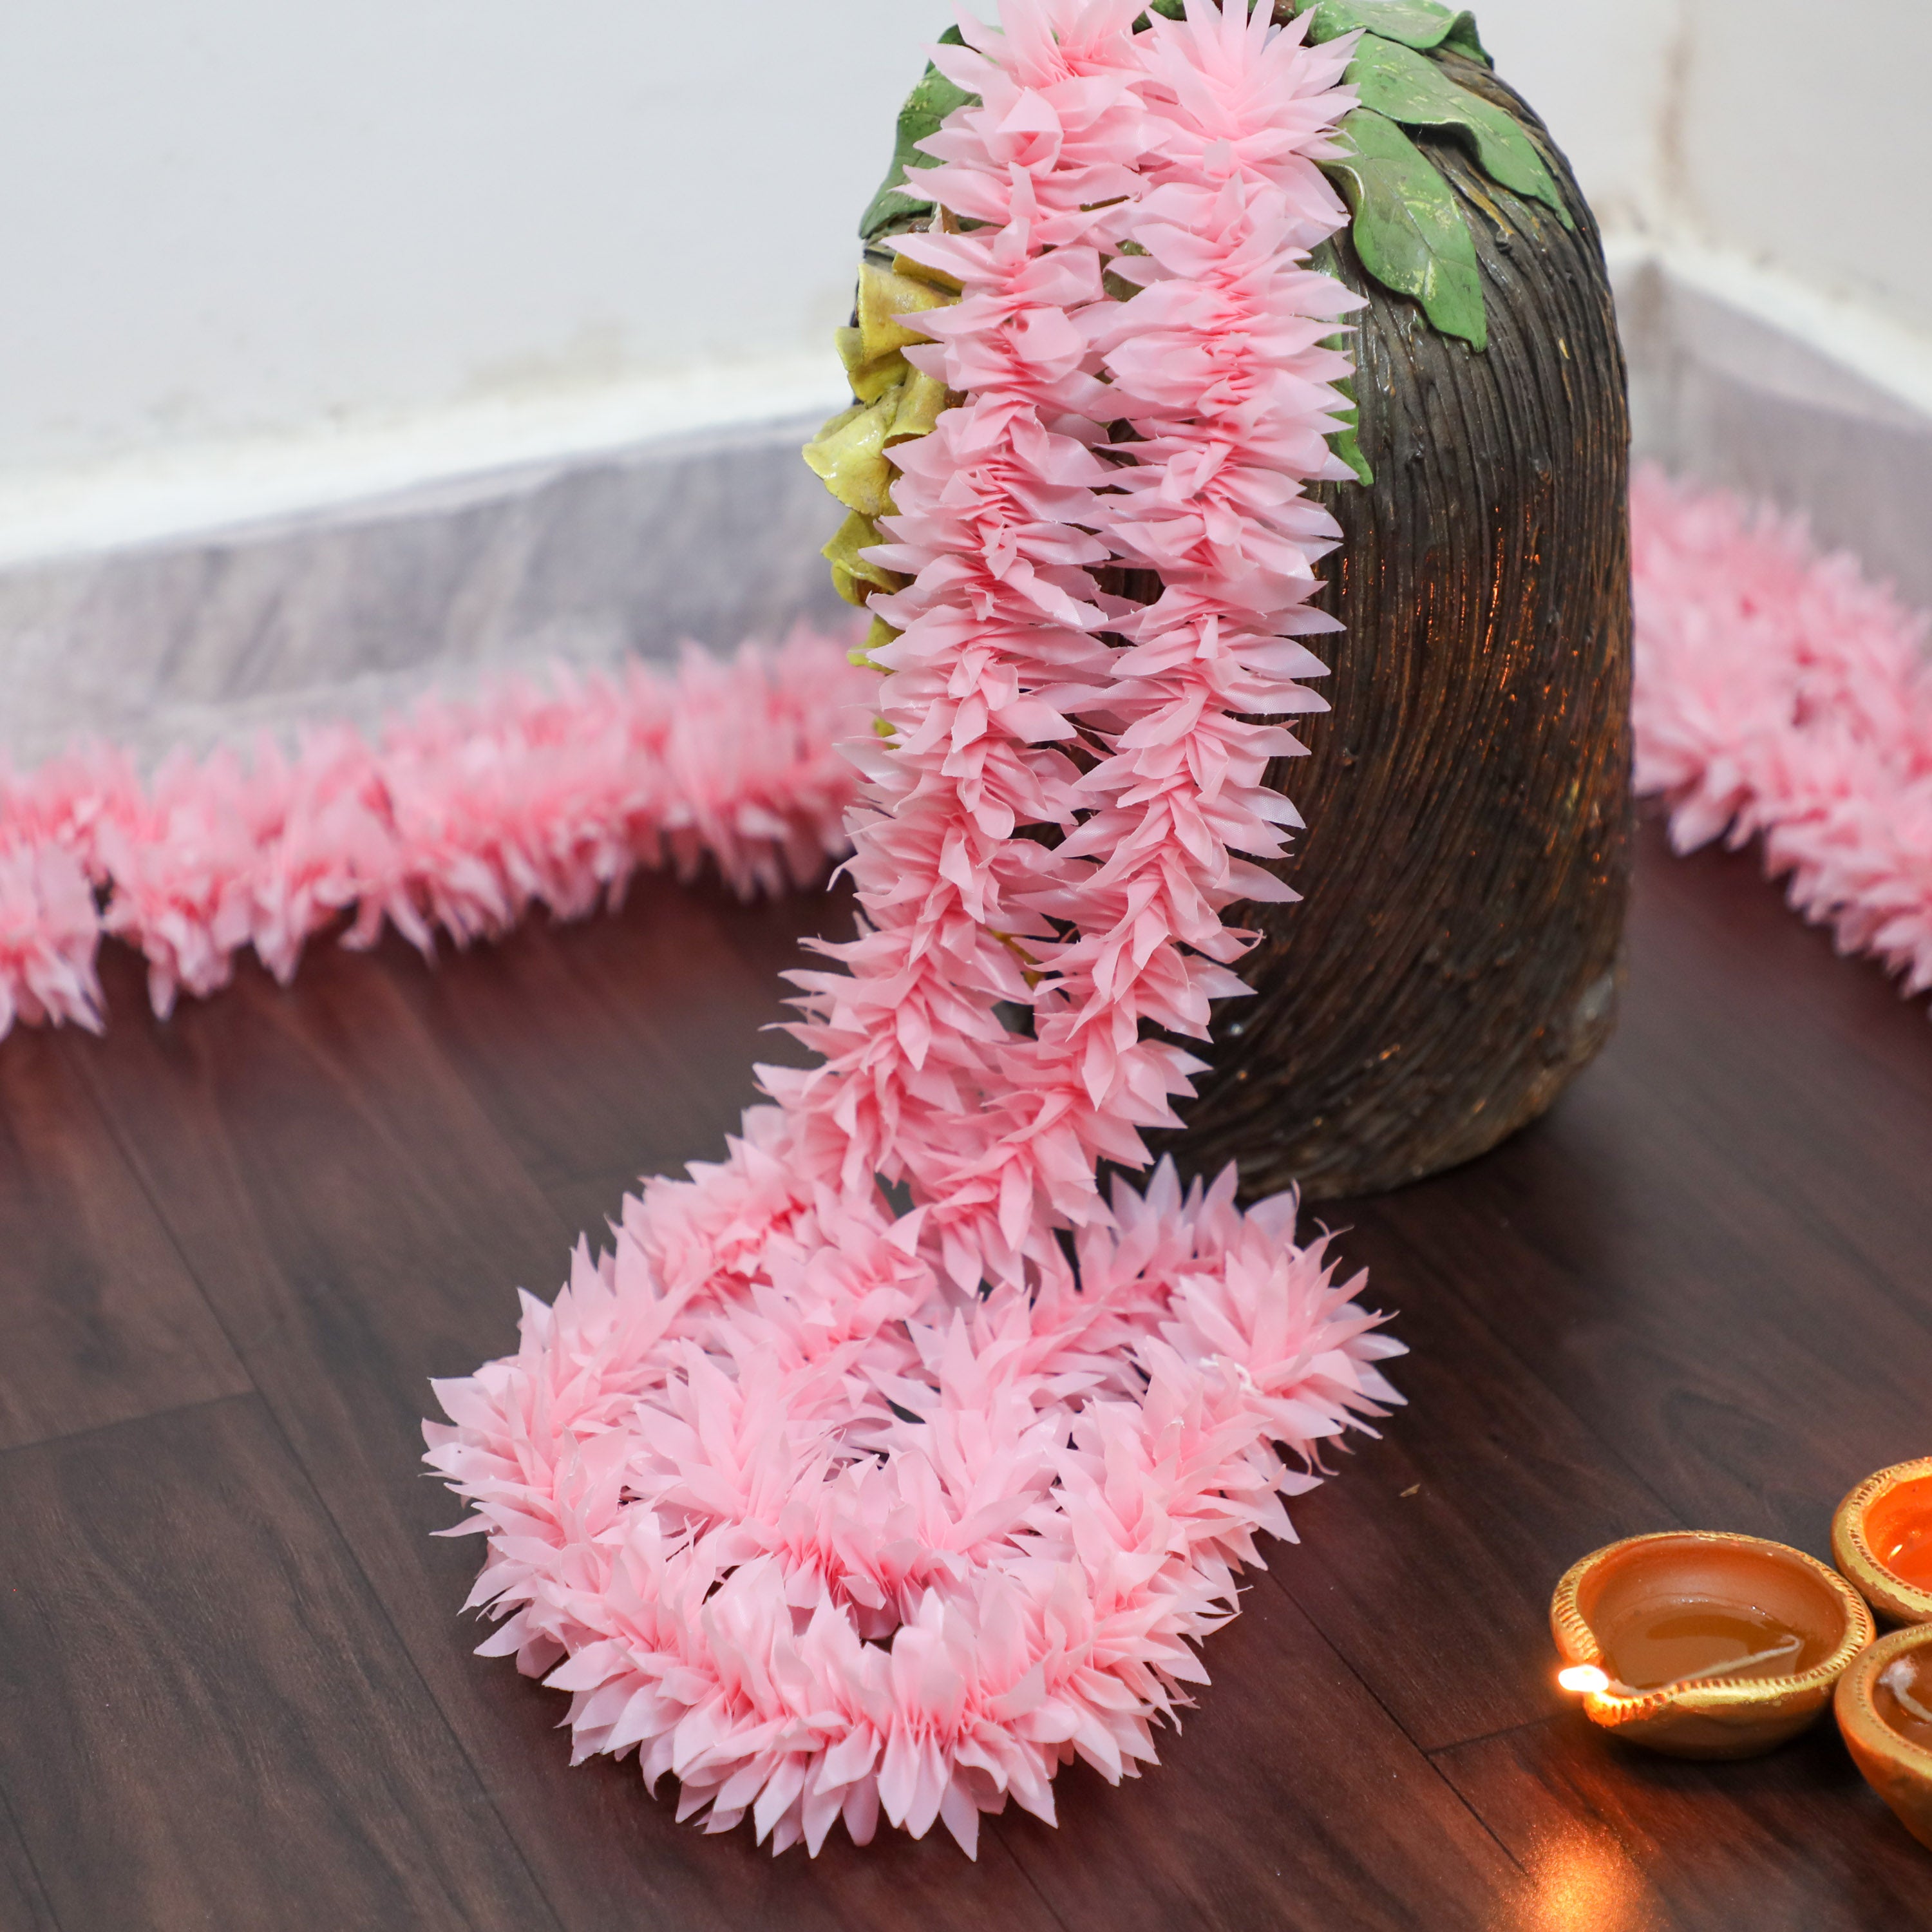 Pink floral decor for Diwali decorations